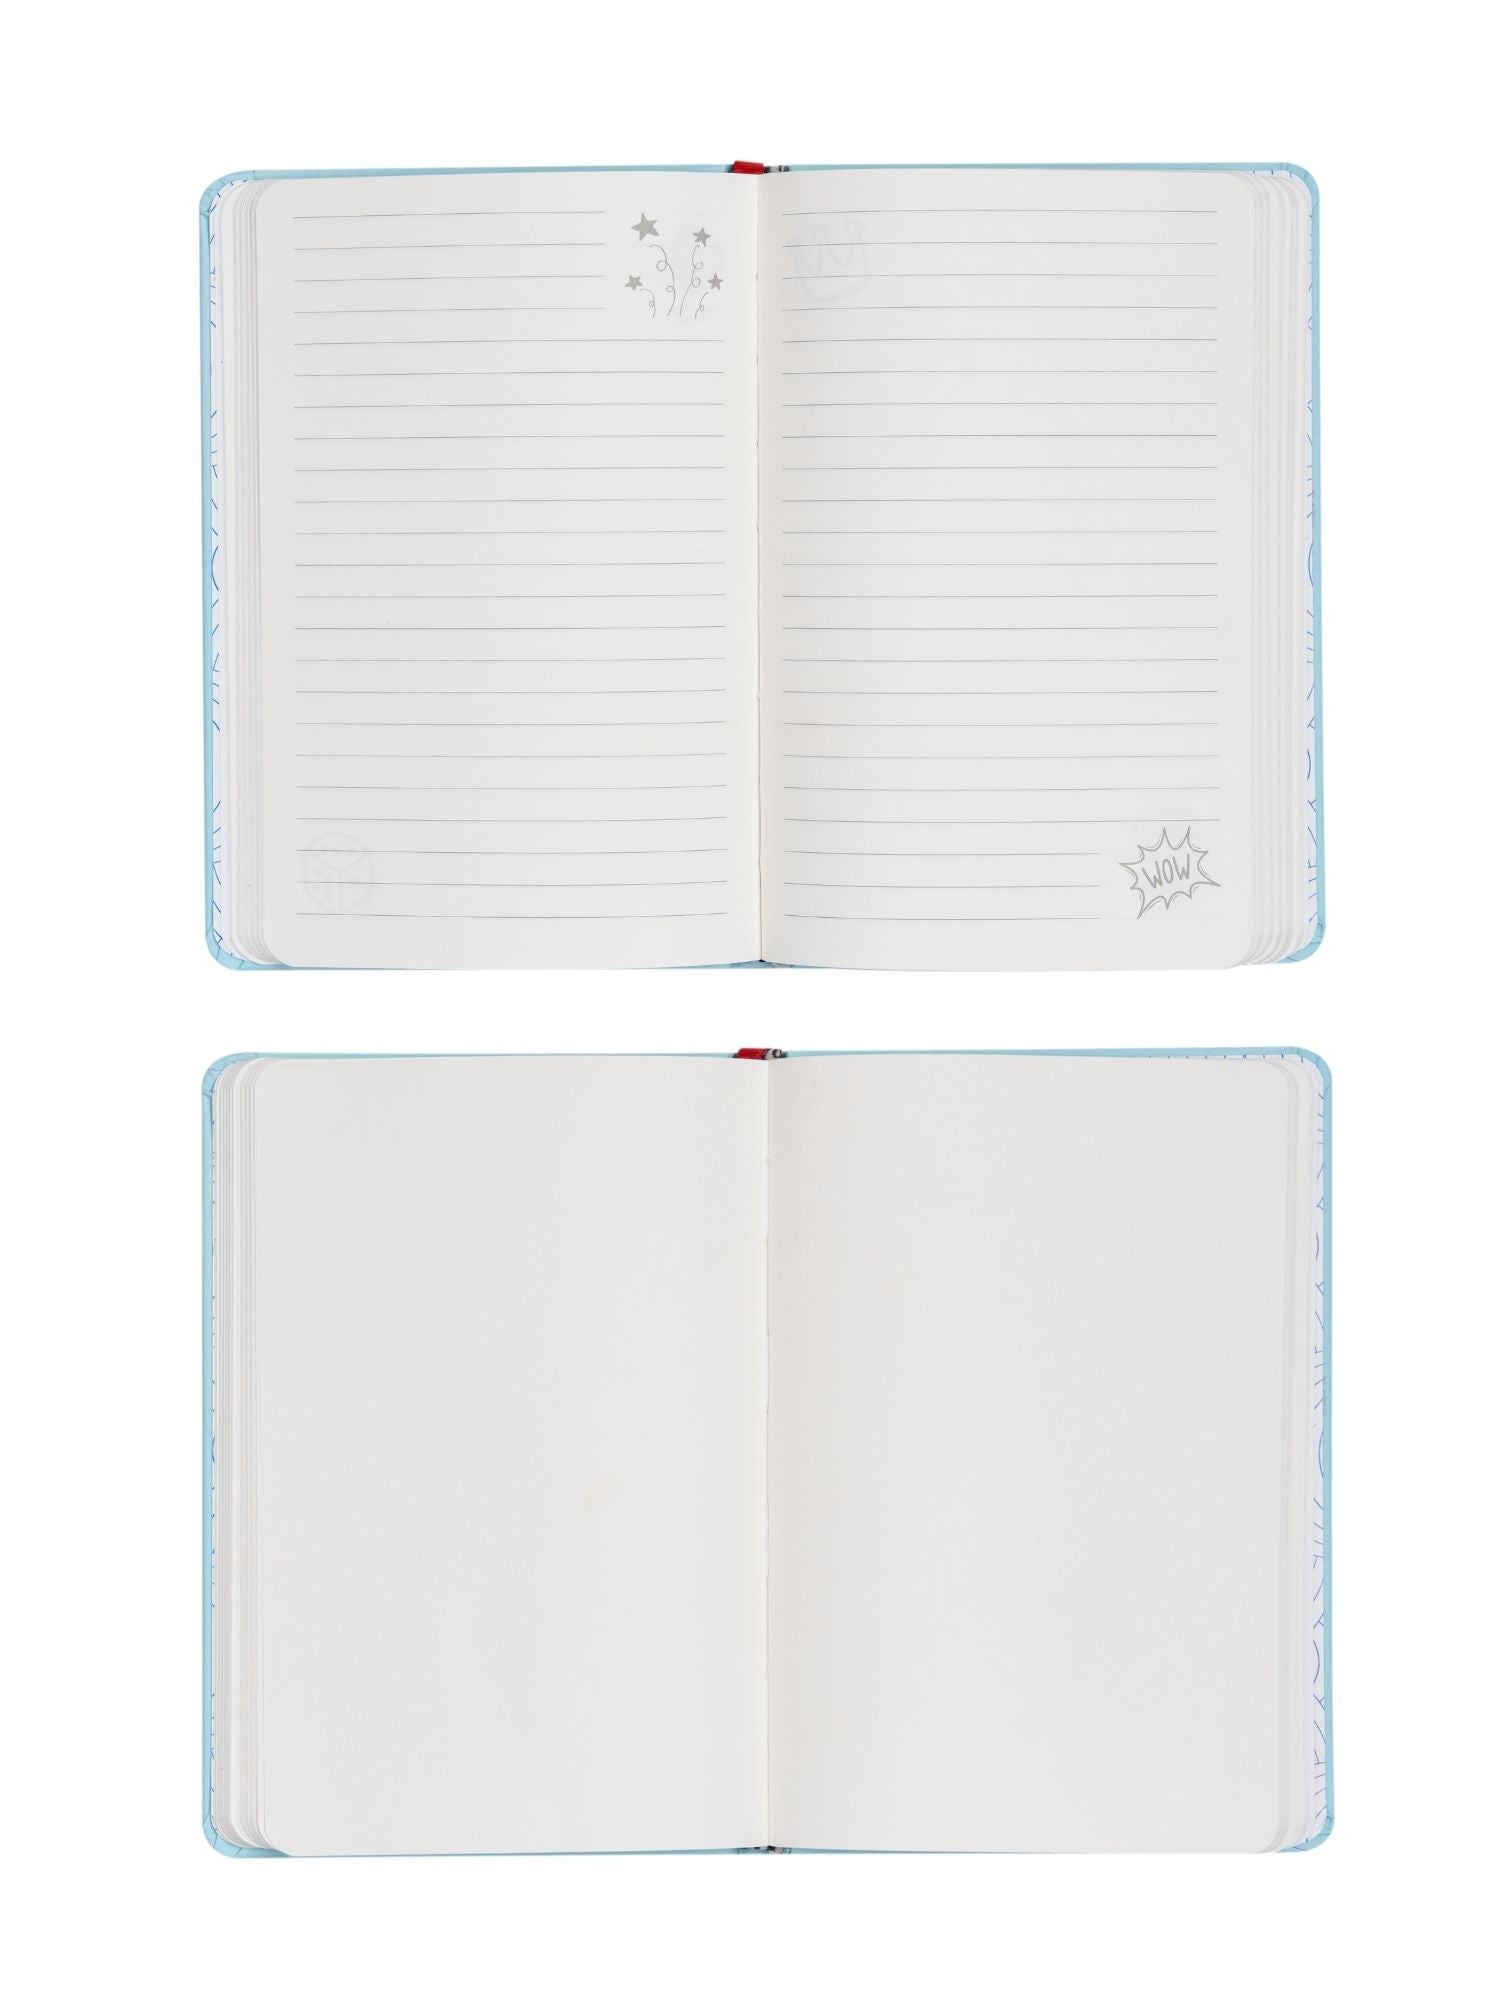 Doodle Initial P Stripes Theme Premium Hard Bound B6 Notebook Diary